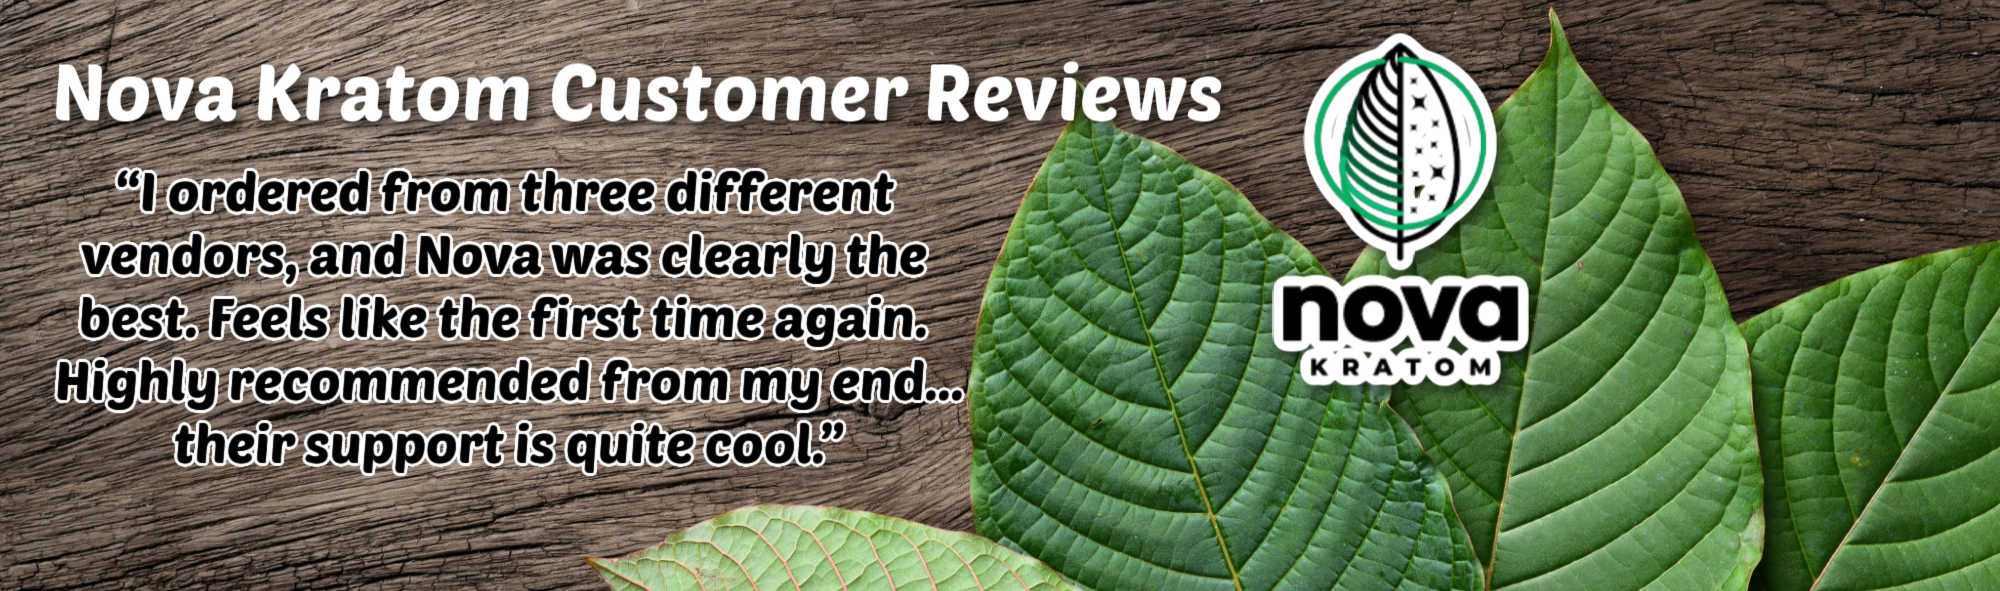 image of nova kratom customer reviews